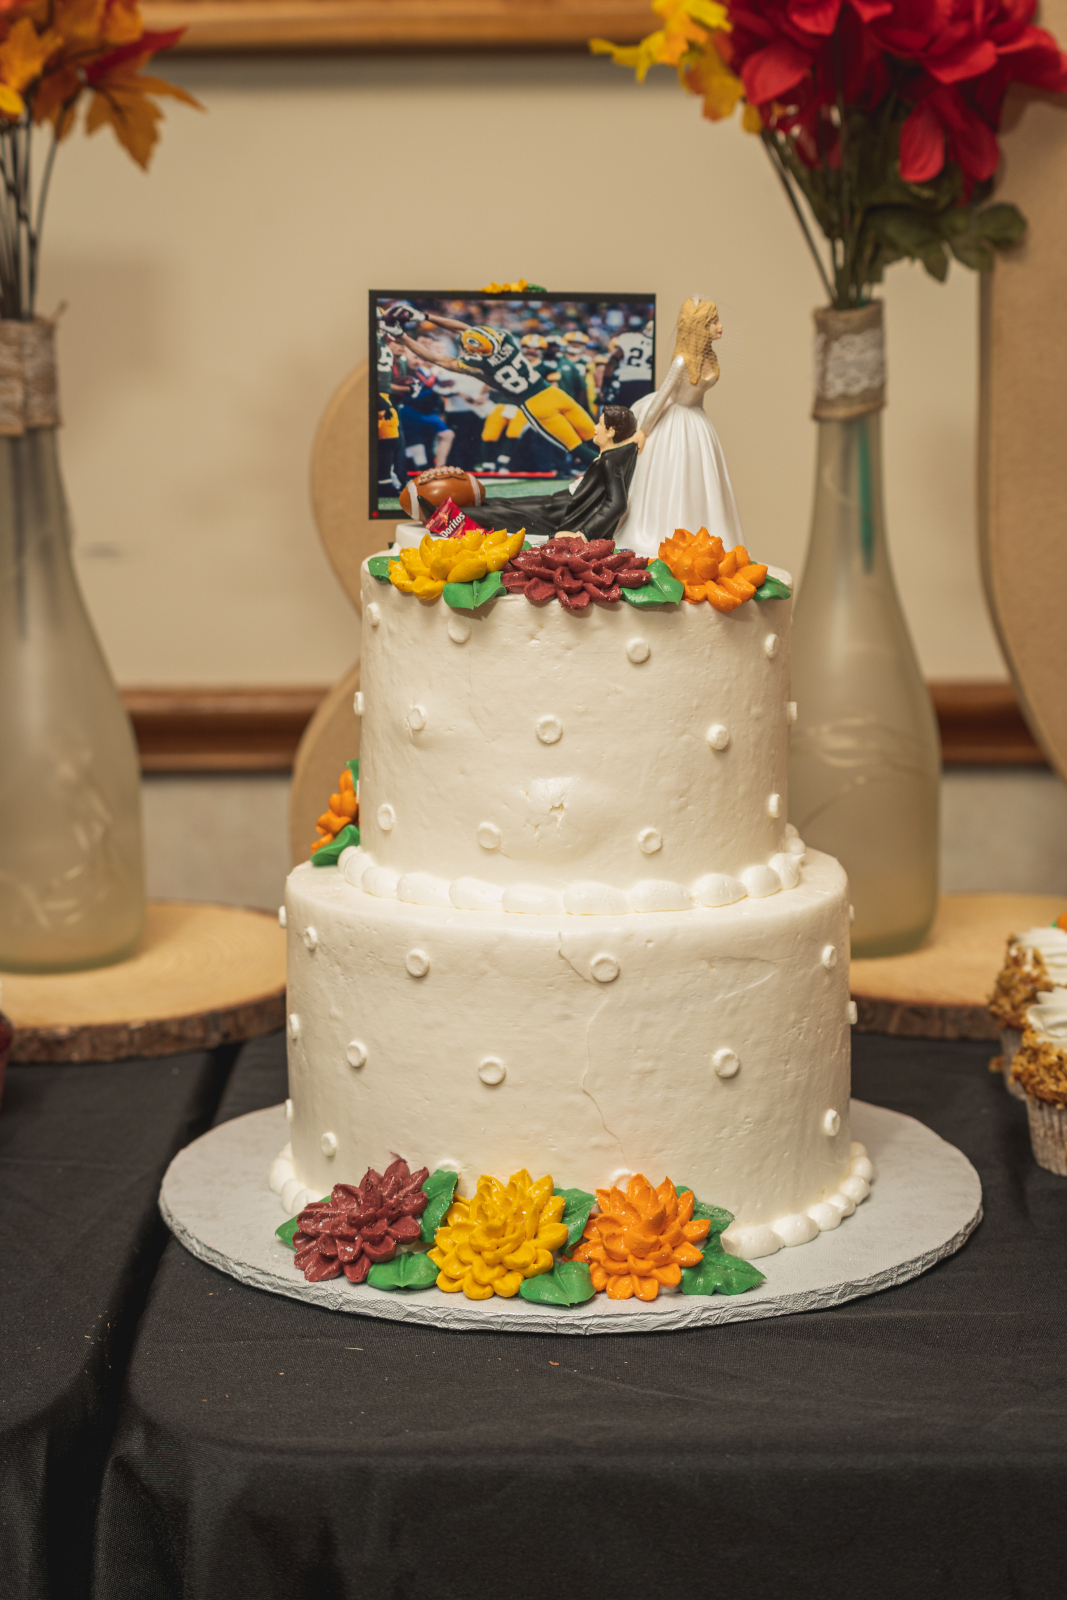 Wedding cake, fall wedding cake, orange flowers, yellow flowers, cute wedding cake, simple wedding cake, fall wedding decor, cute fall wedding reception at Grand Pacific Wedding Gardens